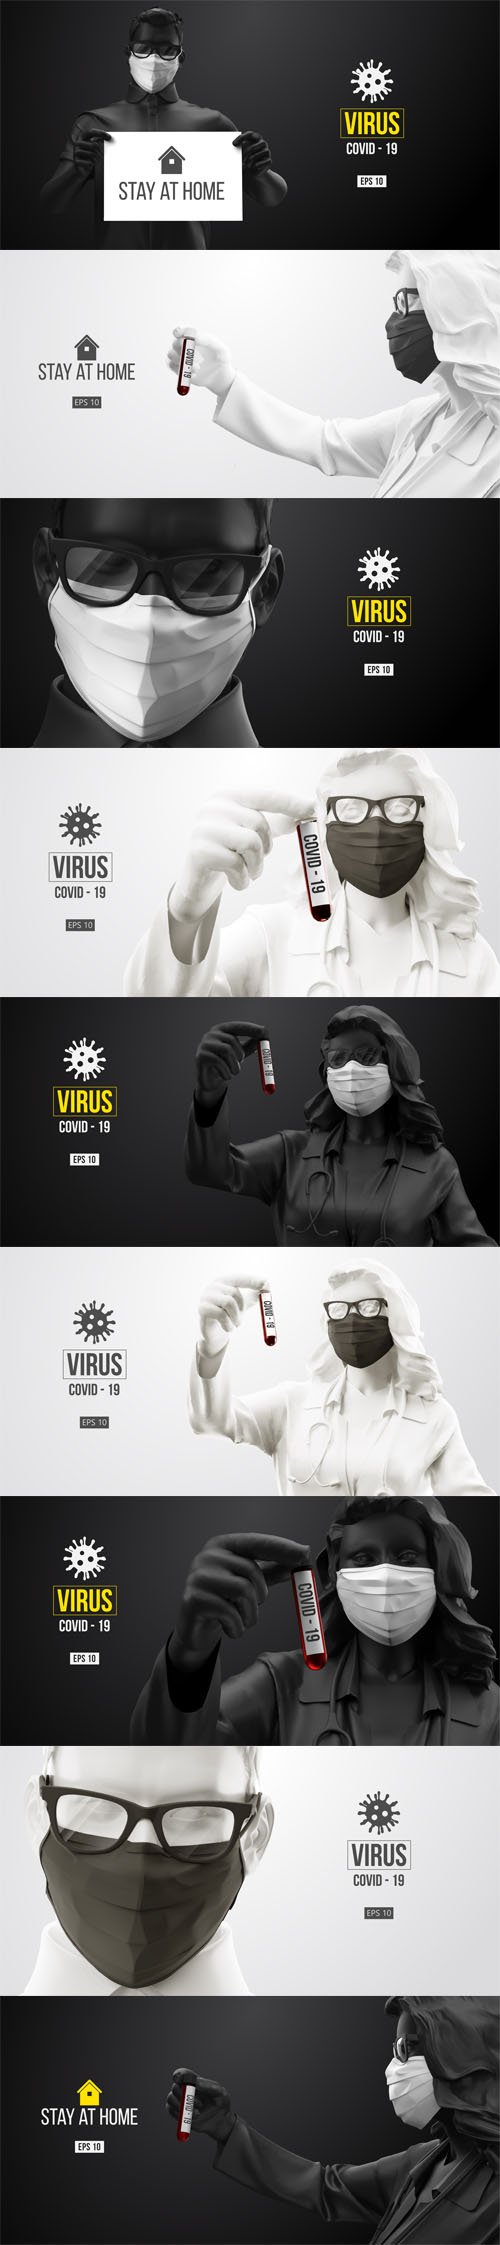 Coronavirus Medical Mask and Virus Protection Vector Banners